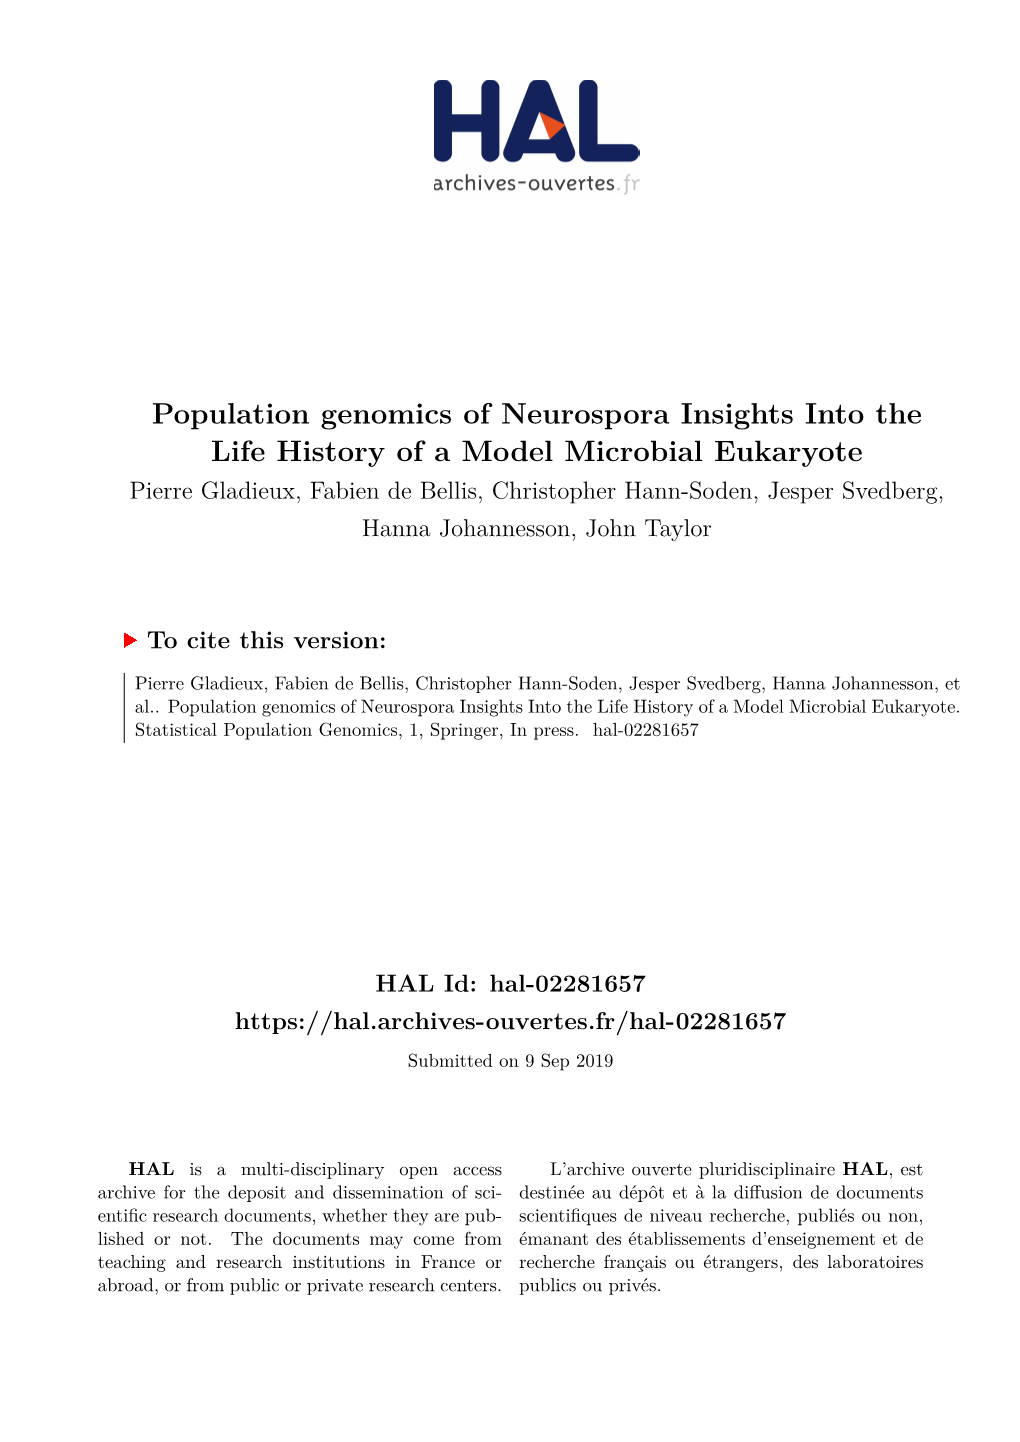 Population Genomics of Neurospora Insights Into the Life History of a Model Microbial Eukaryote